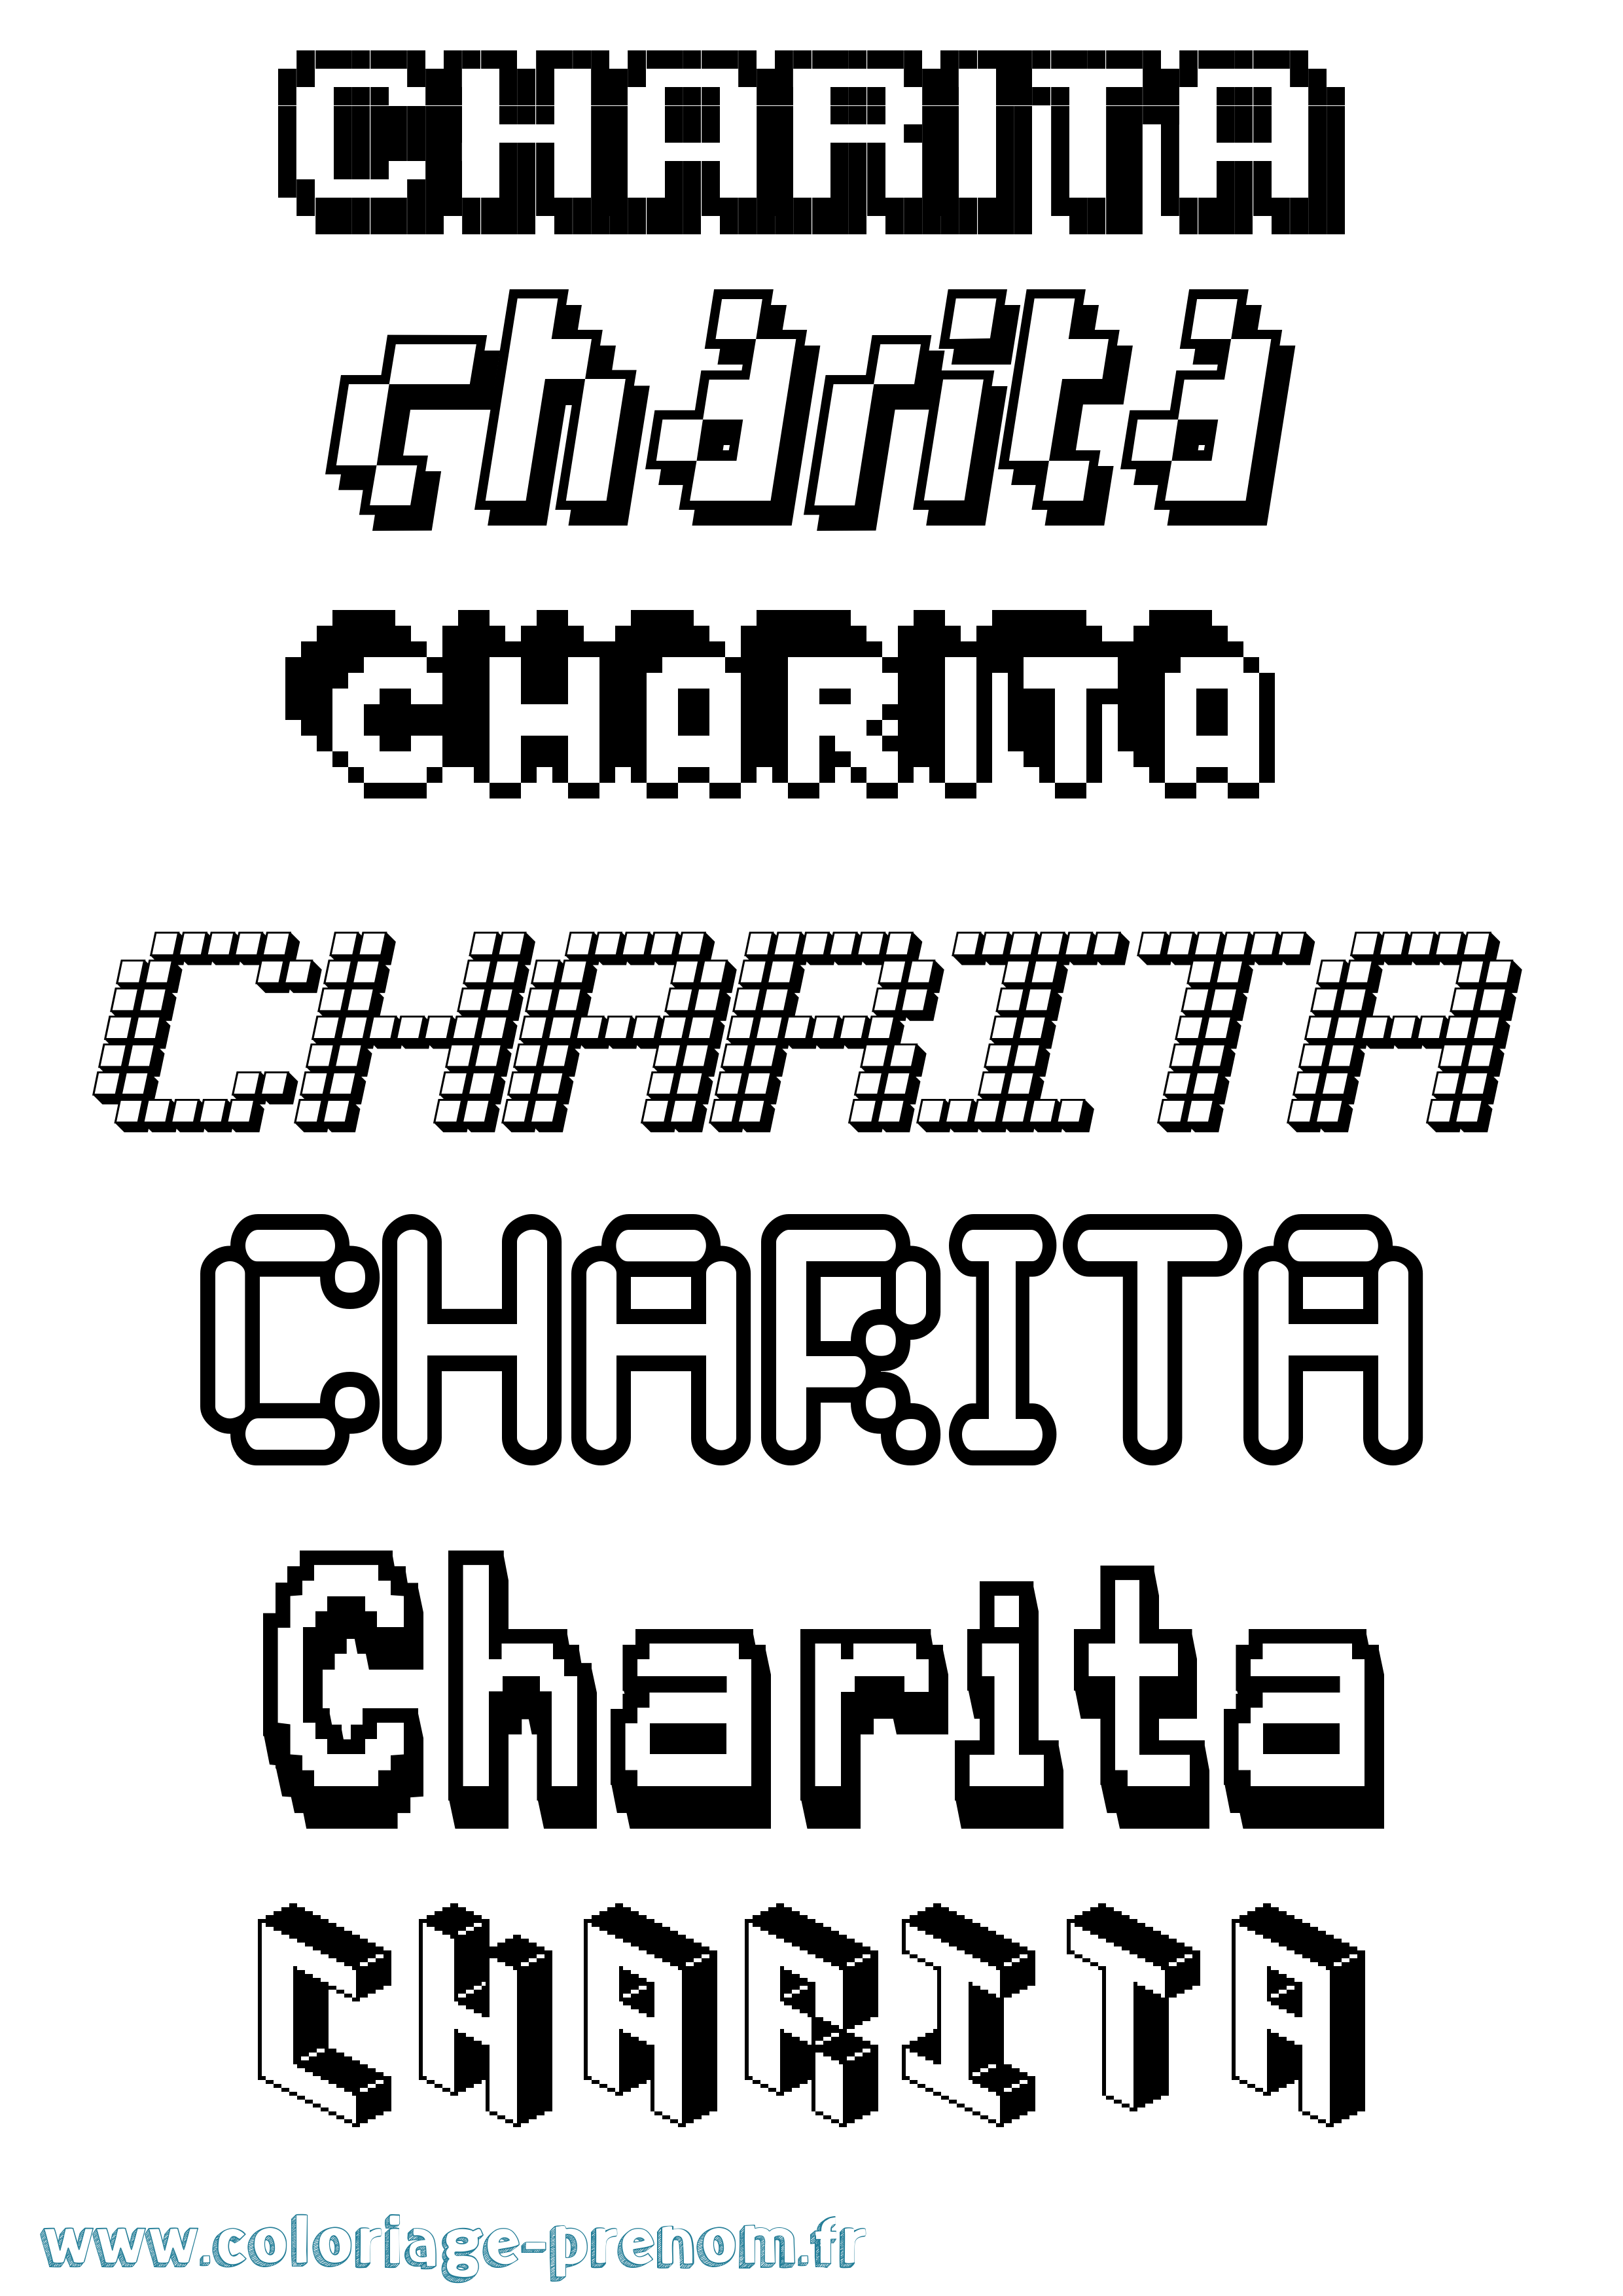 Coloriage prénom Charita Pixel